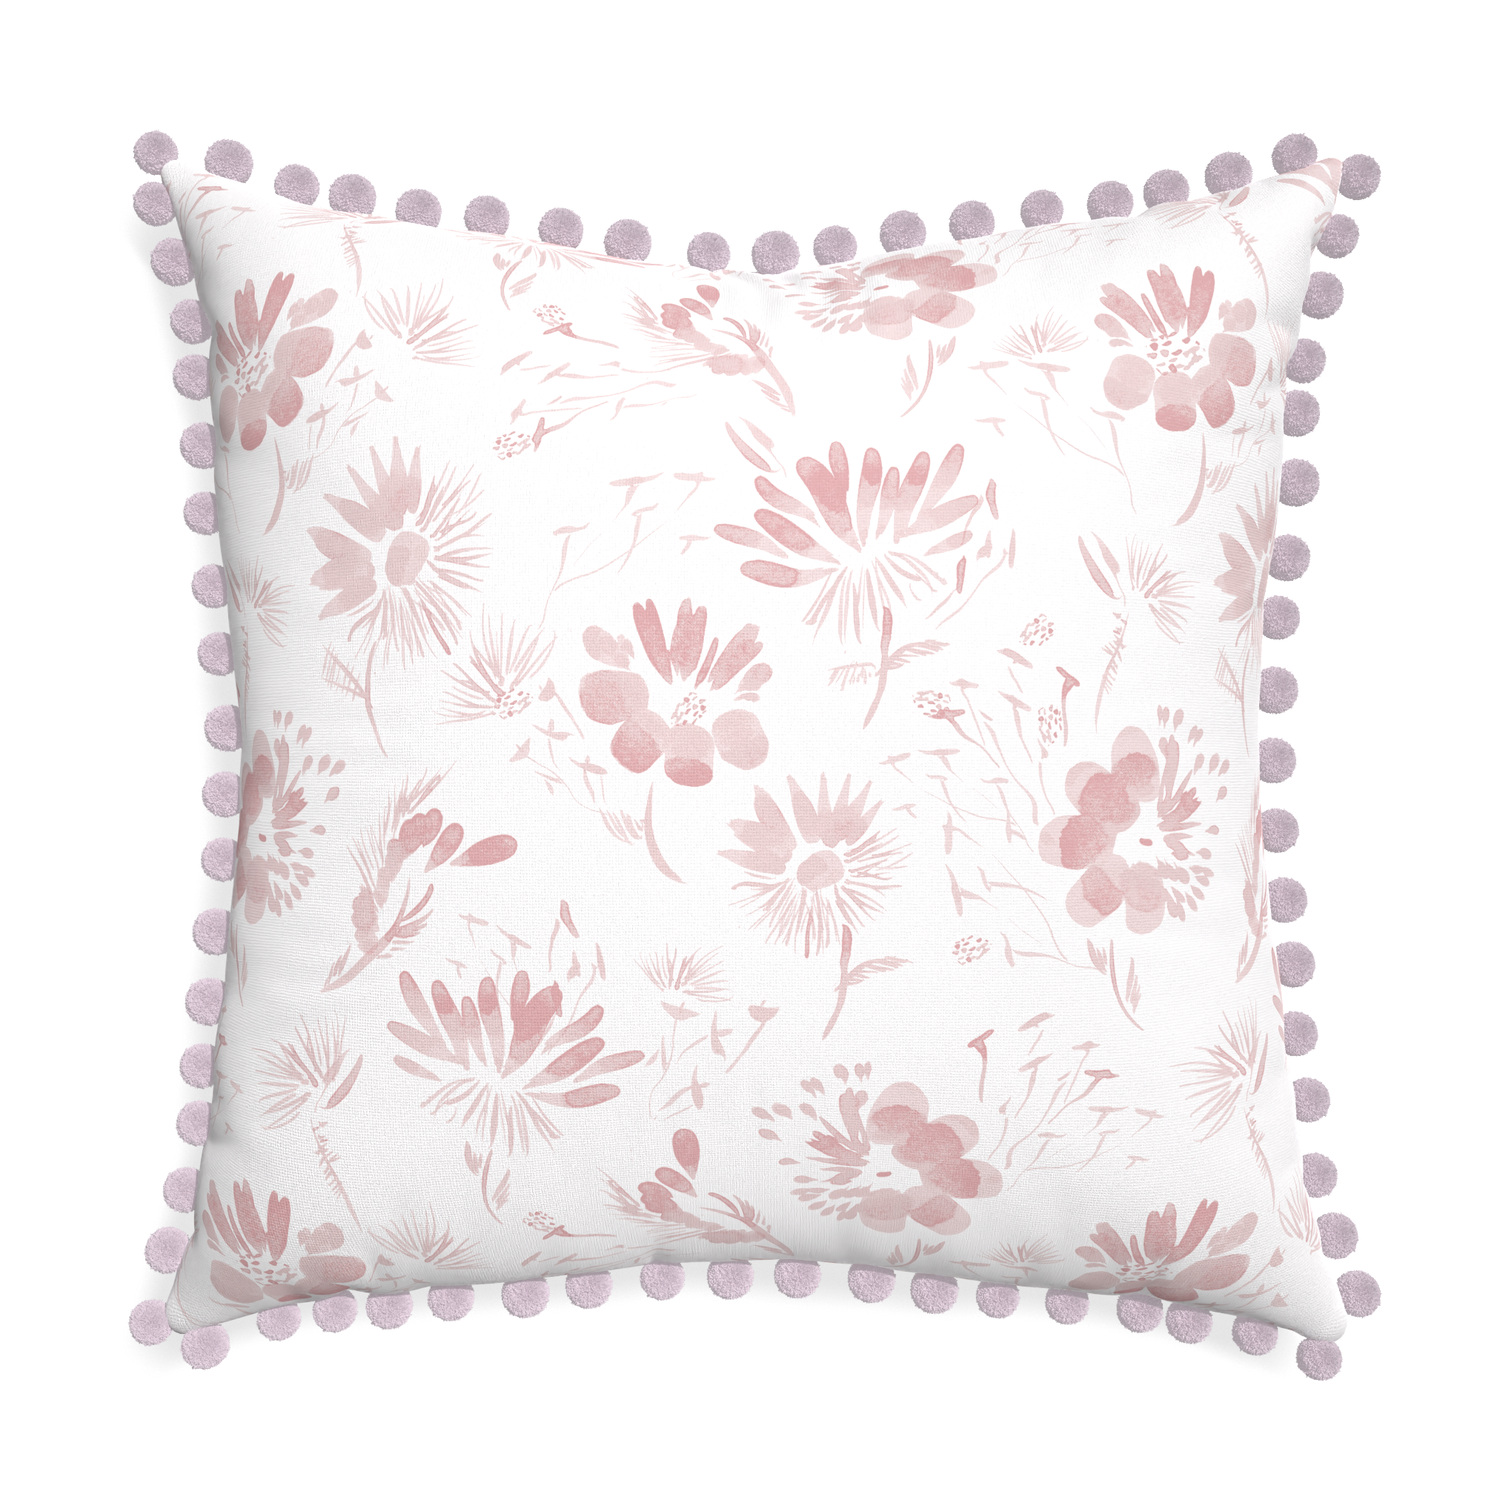 Euro-sham blake custom pink floralpillow with l on white background